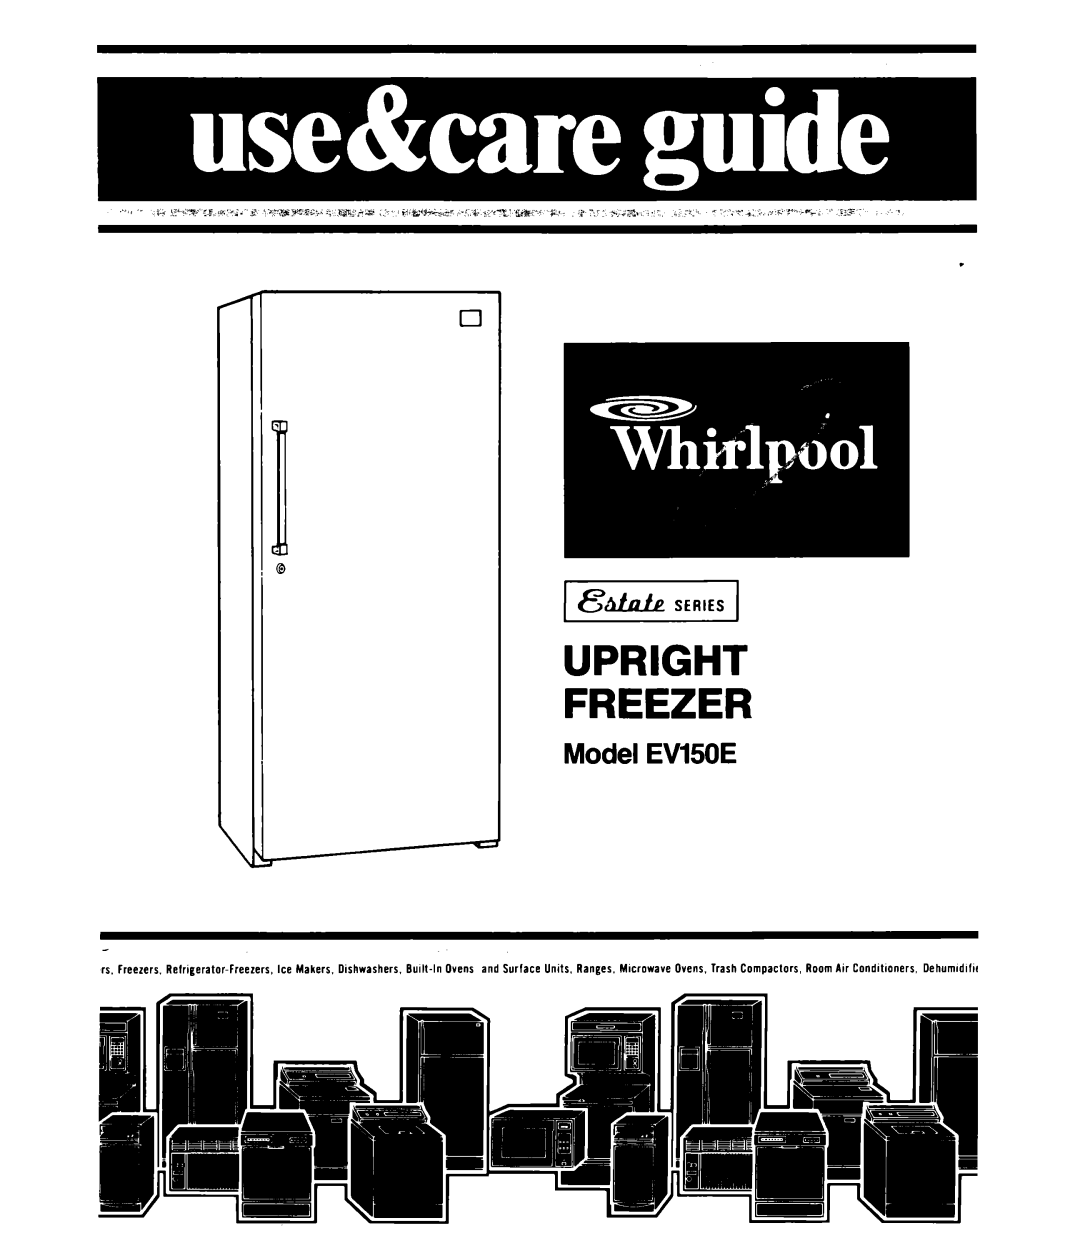 Whirlpool manual Model EV150E, Upright Freezer 